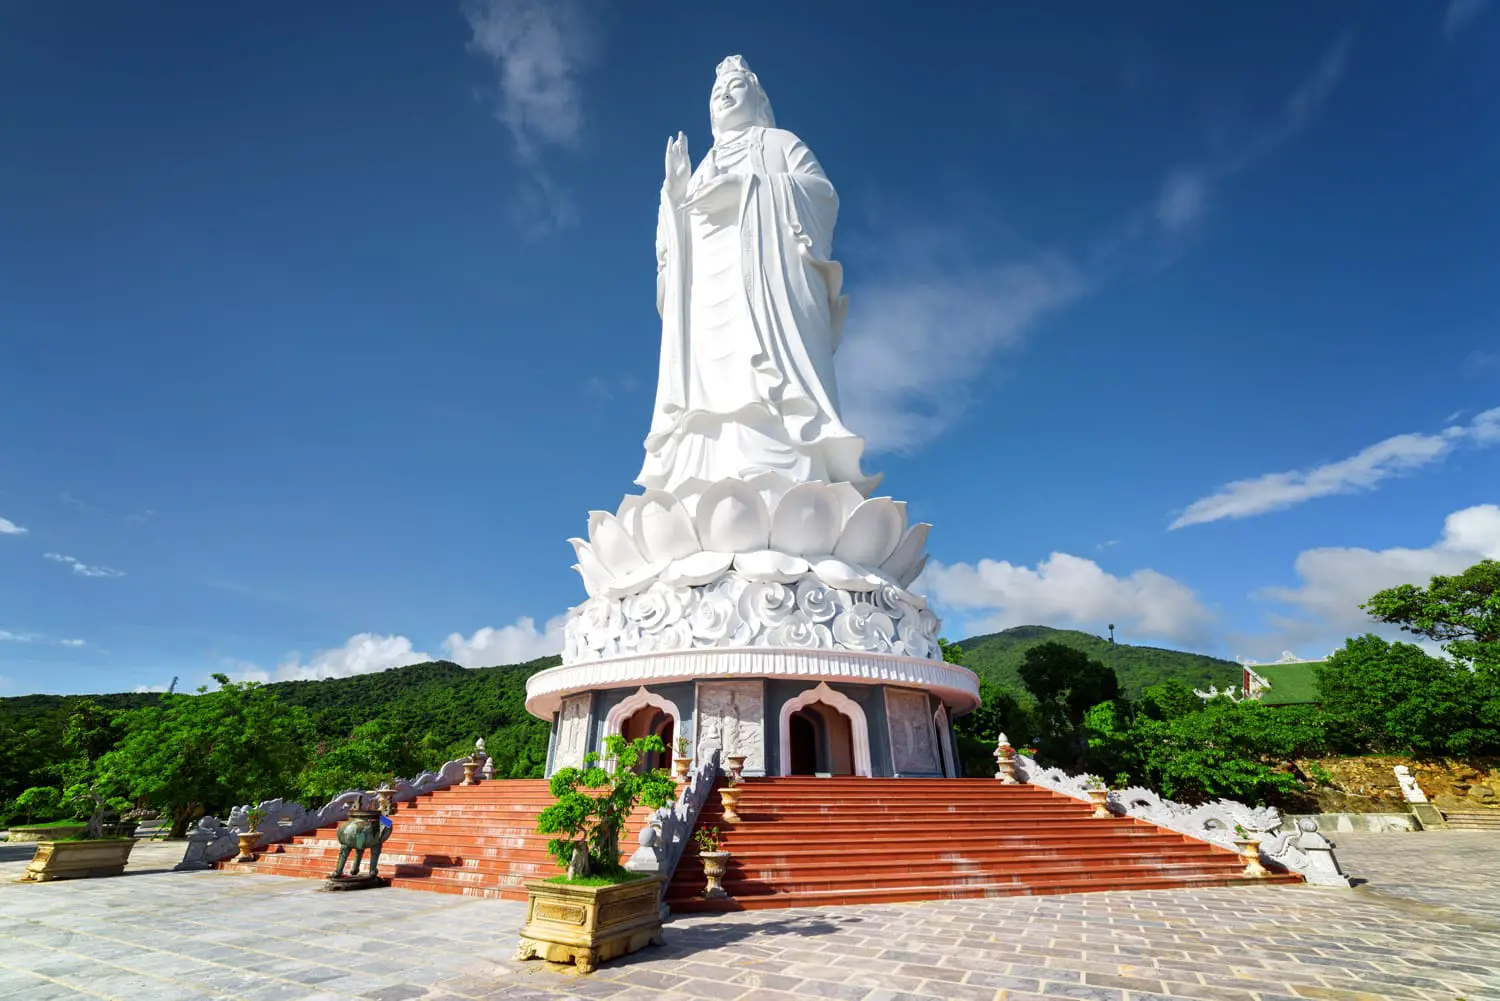 Majestic view of the Lady Buddha (the Bodhisattva of Mercy) at the Linh Ung Pagoda, Danang (Da Nang), Vietnam. White Buddha statue on blue sky background.